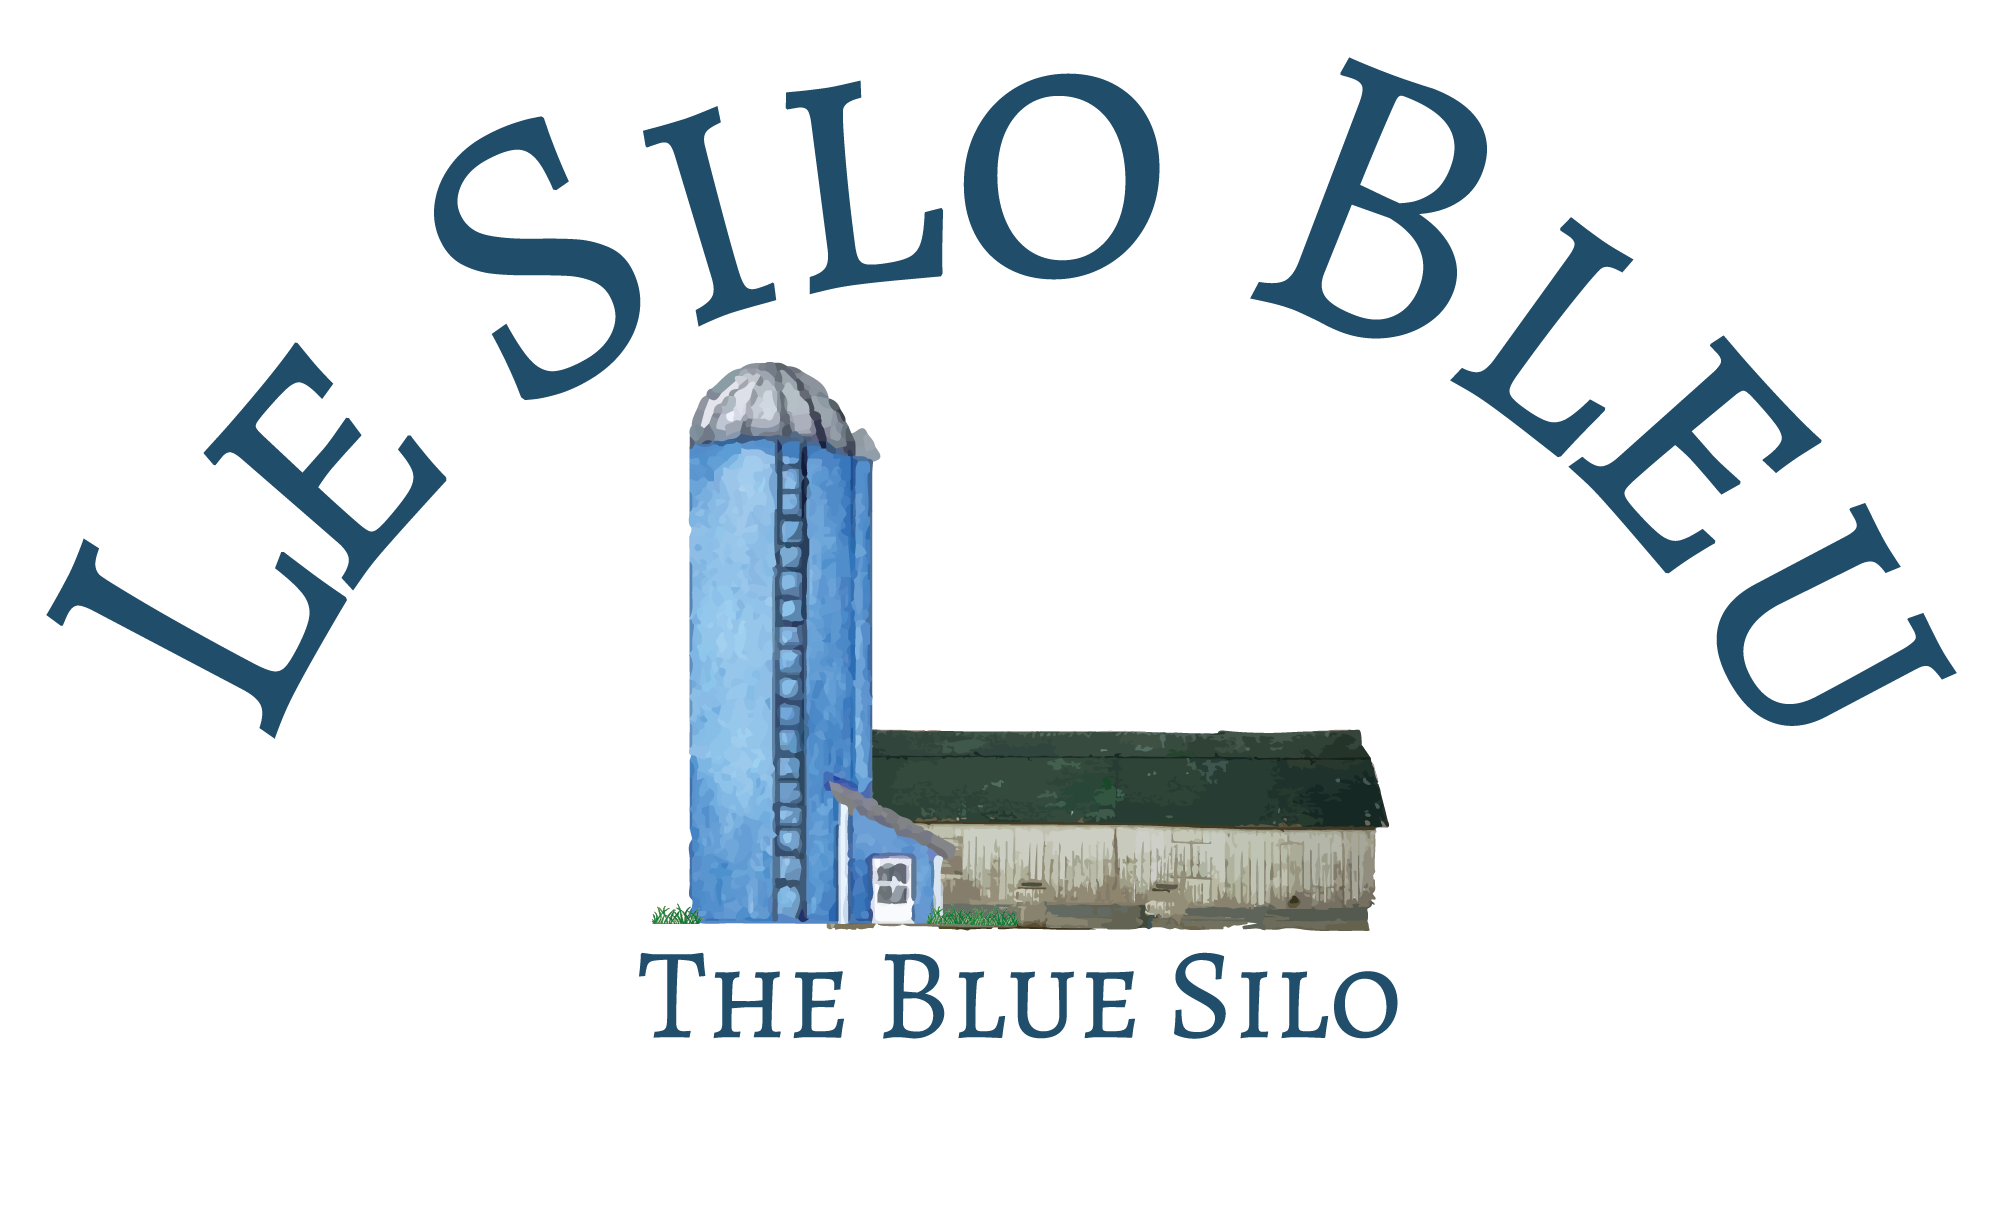 Logo Banner for Le Silo Bleu-The Blue Silo featuring a barn and a blue silo.